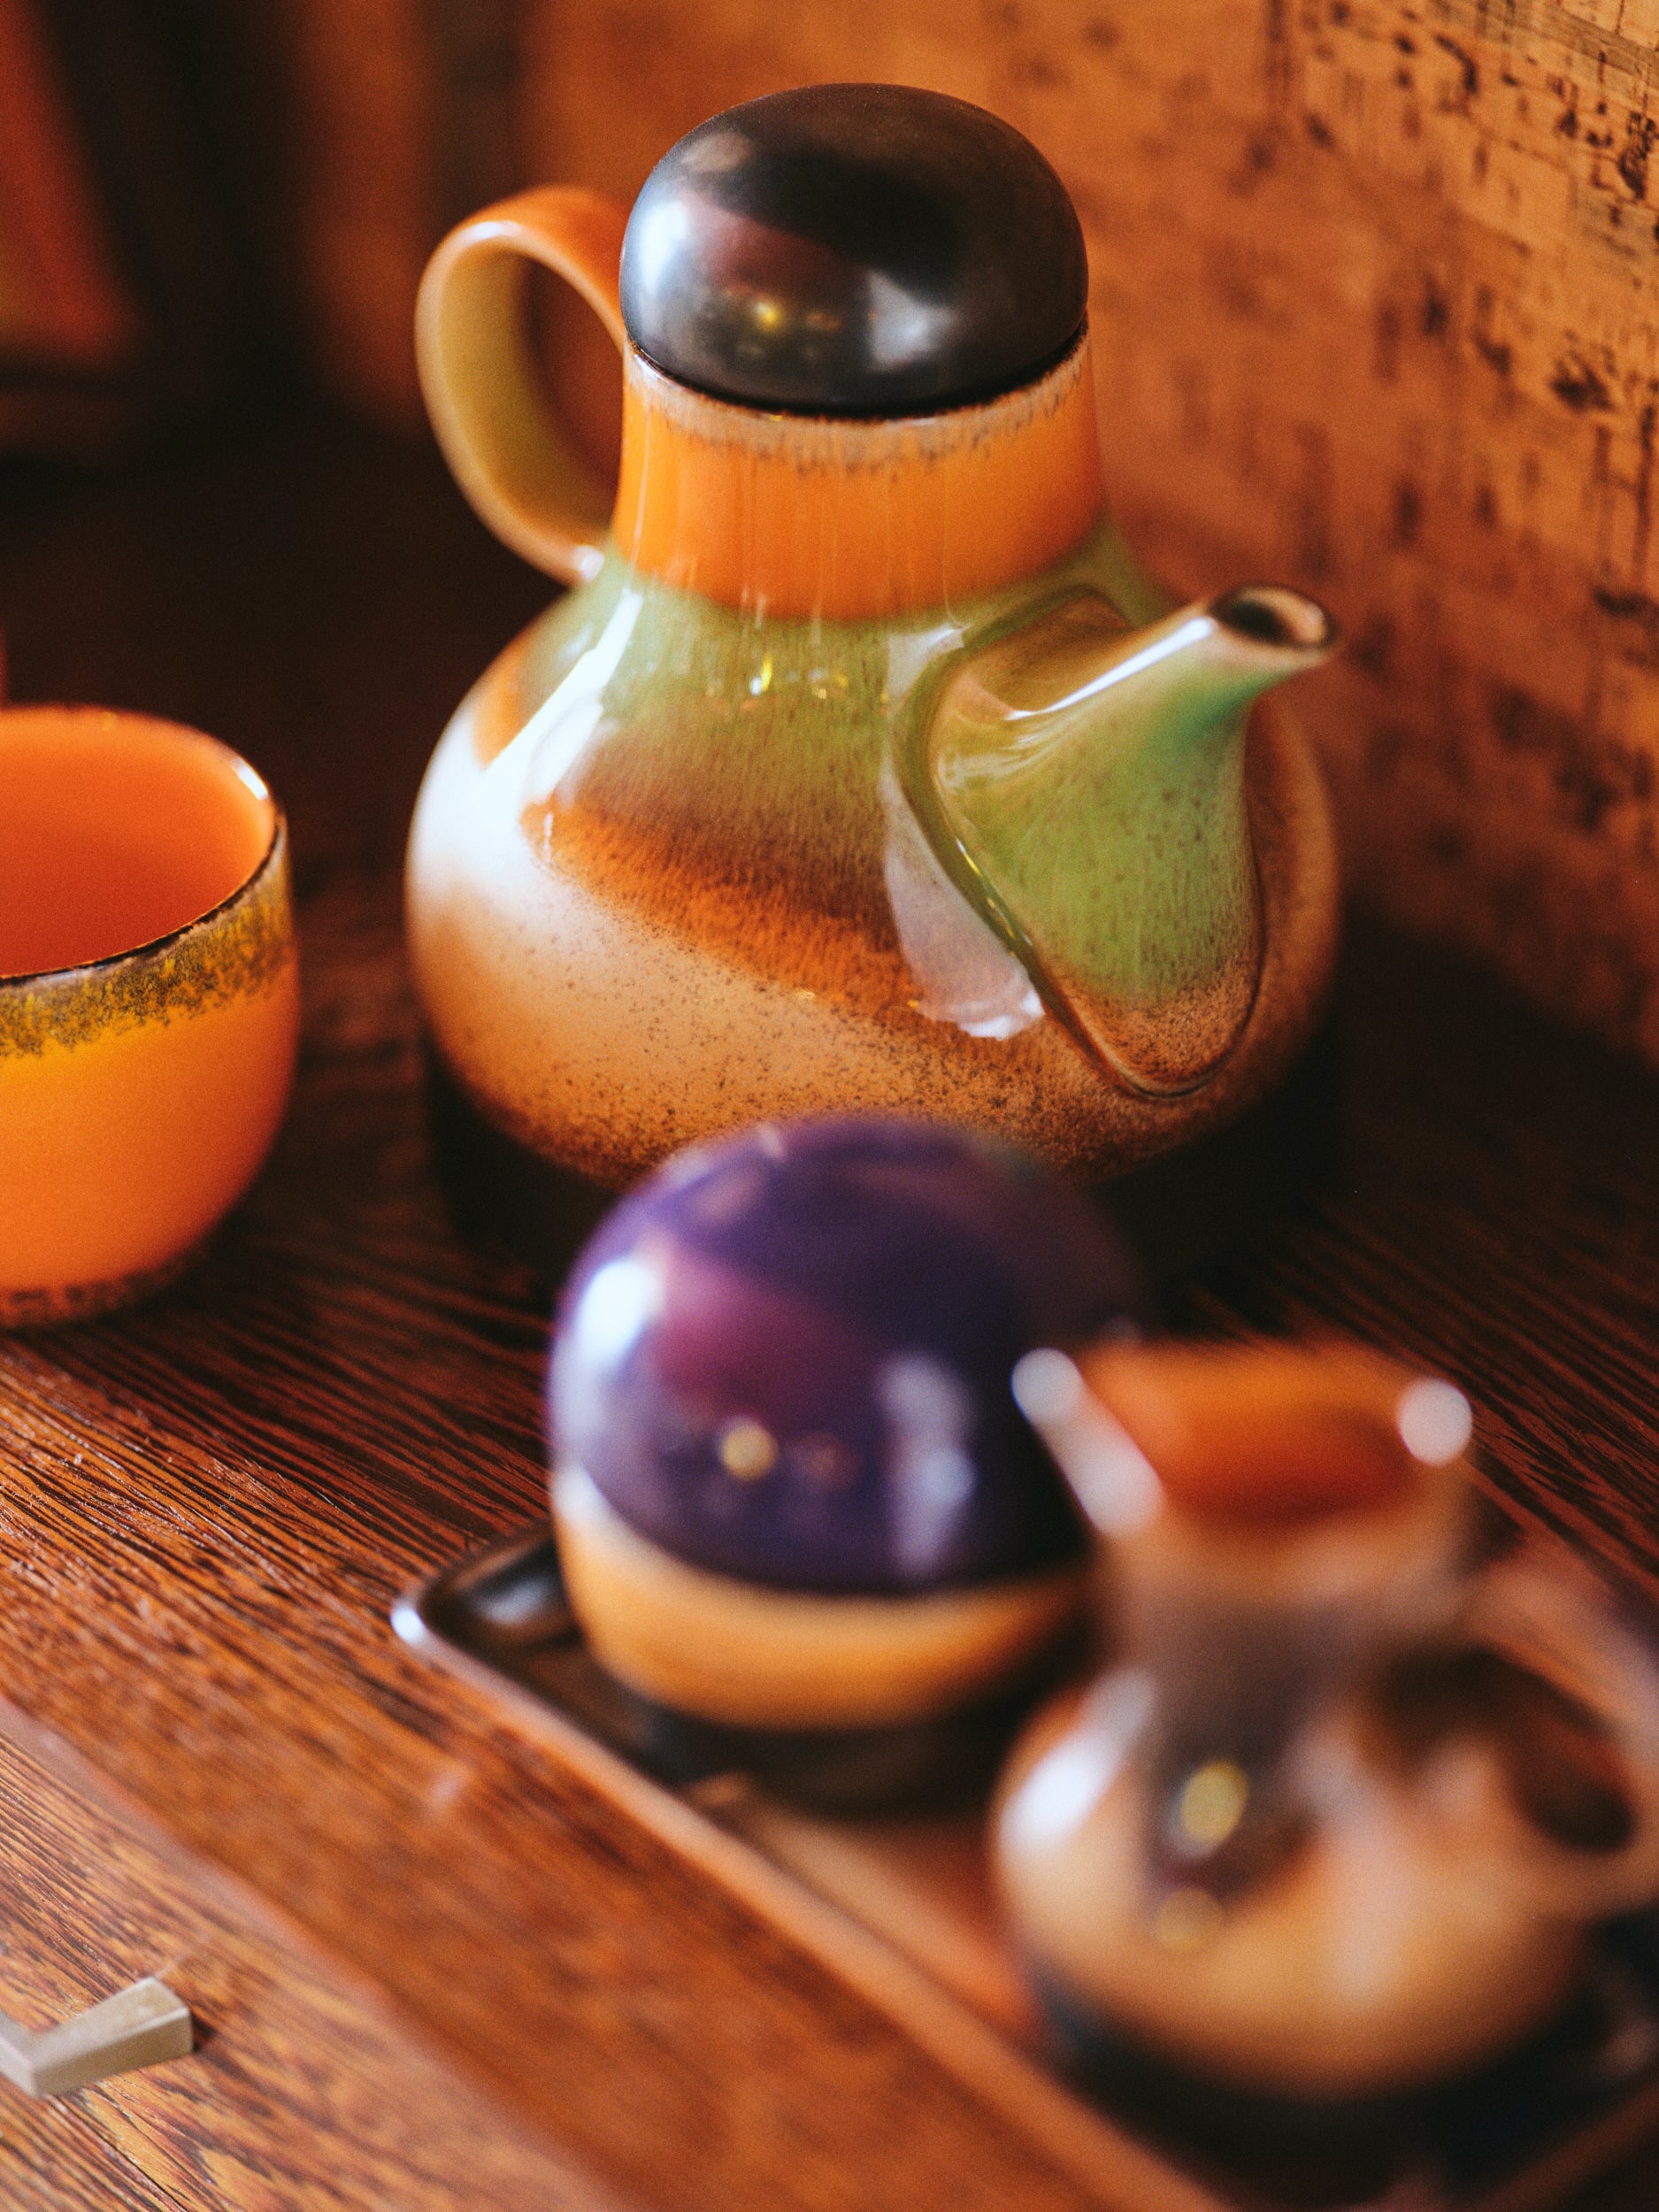 70s ceramics: coffee pot morning